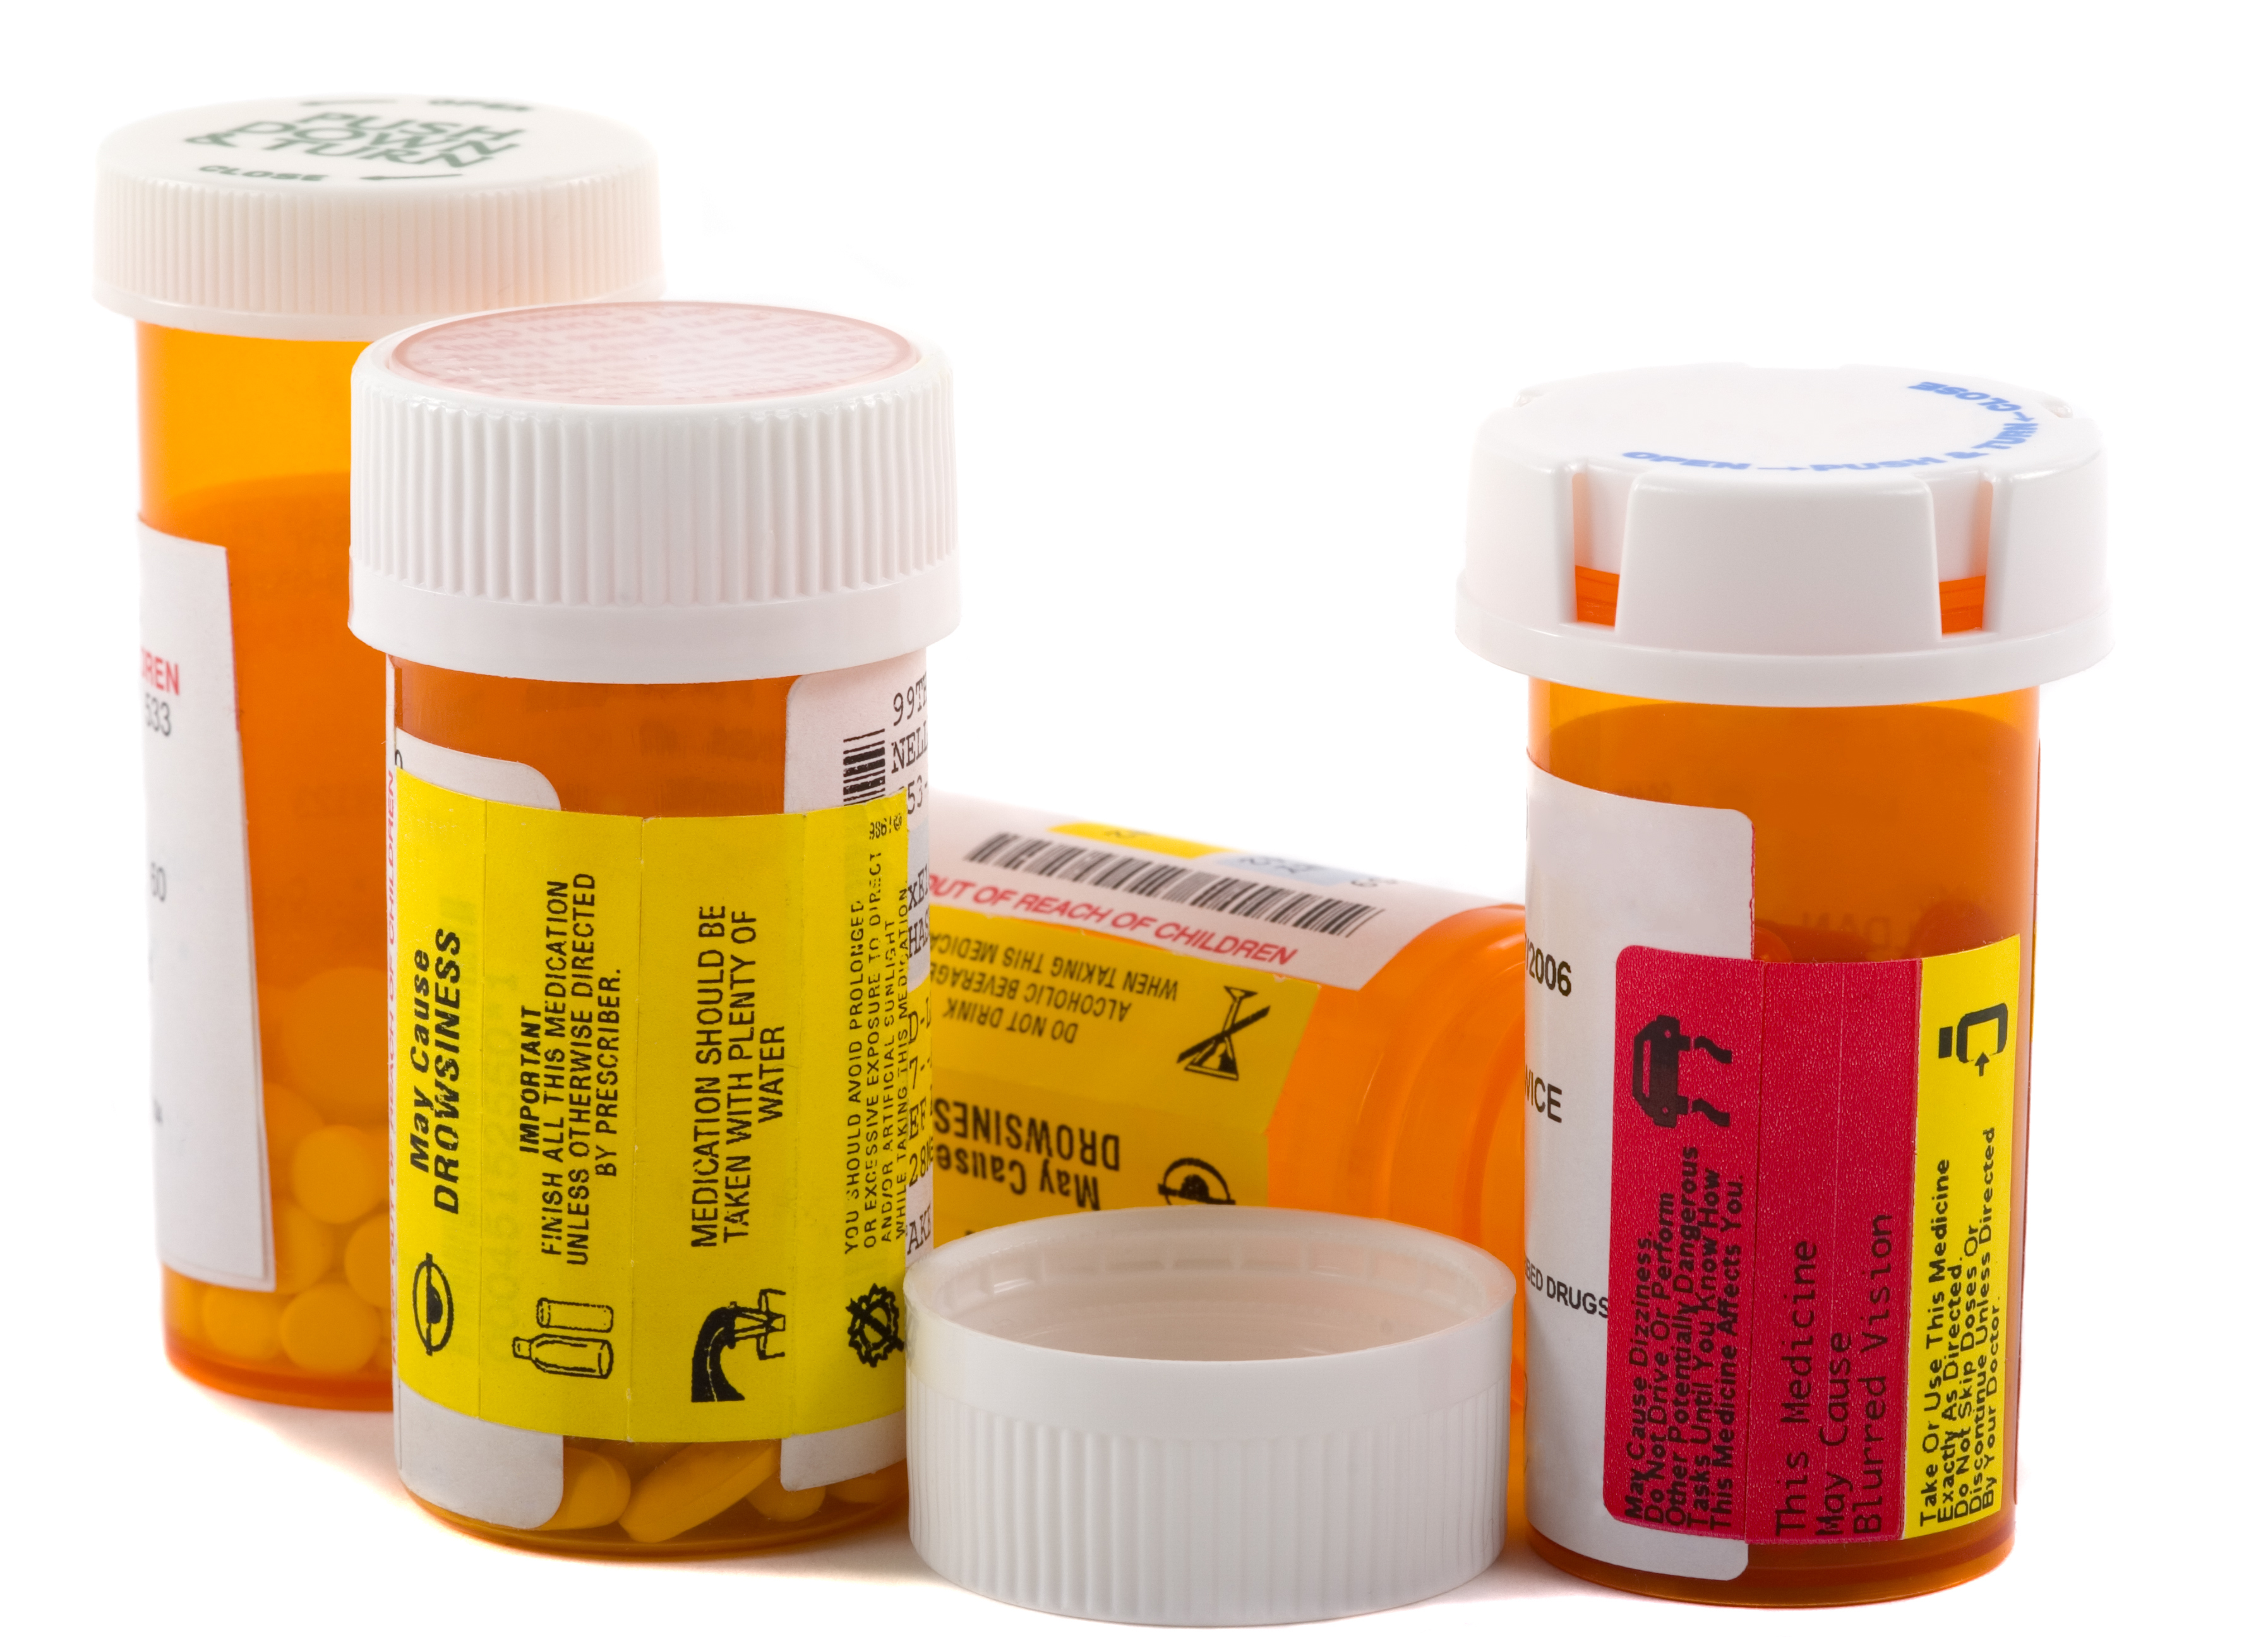 Different bottles of prescription medications